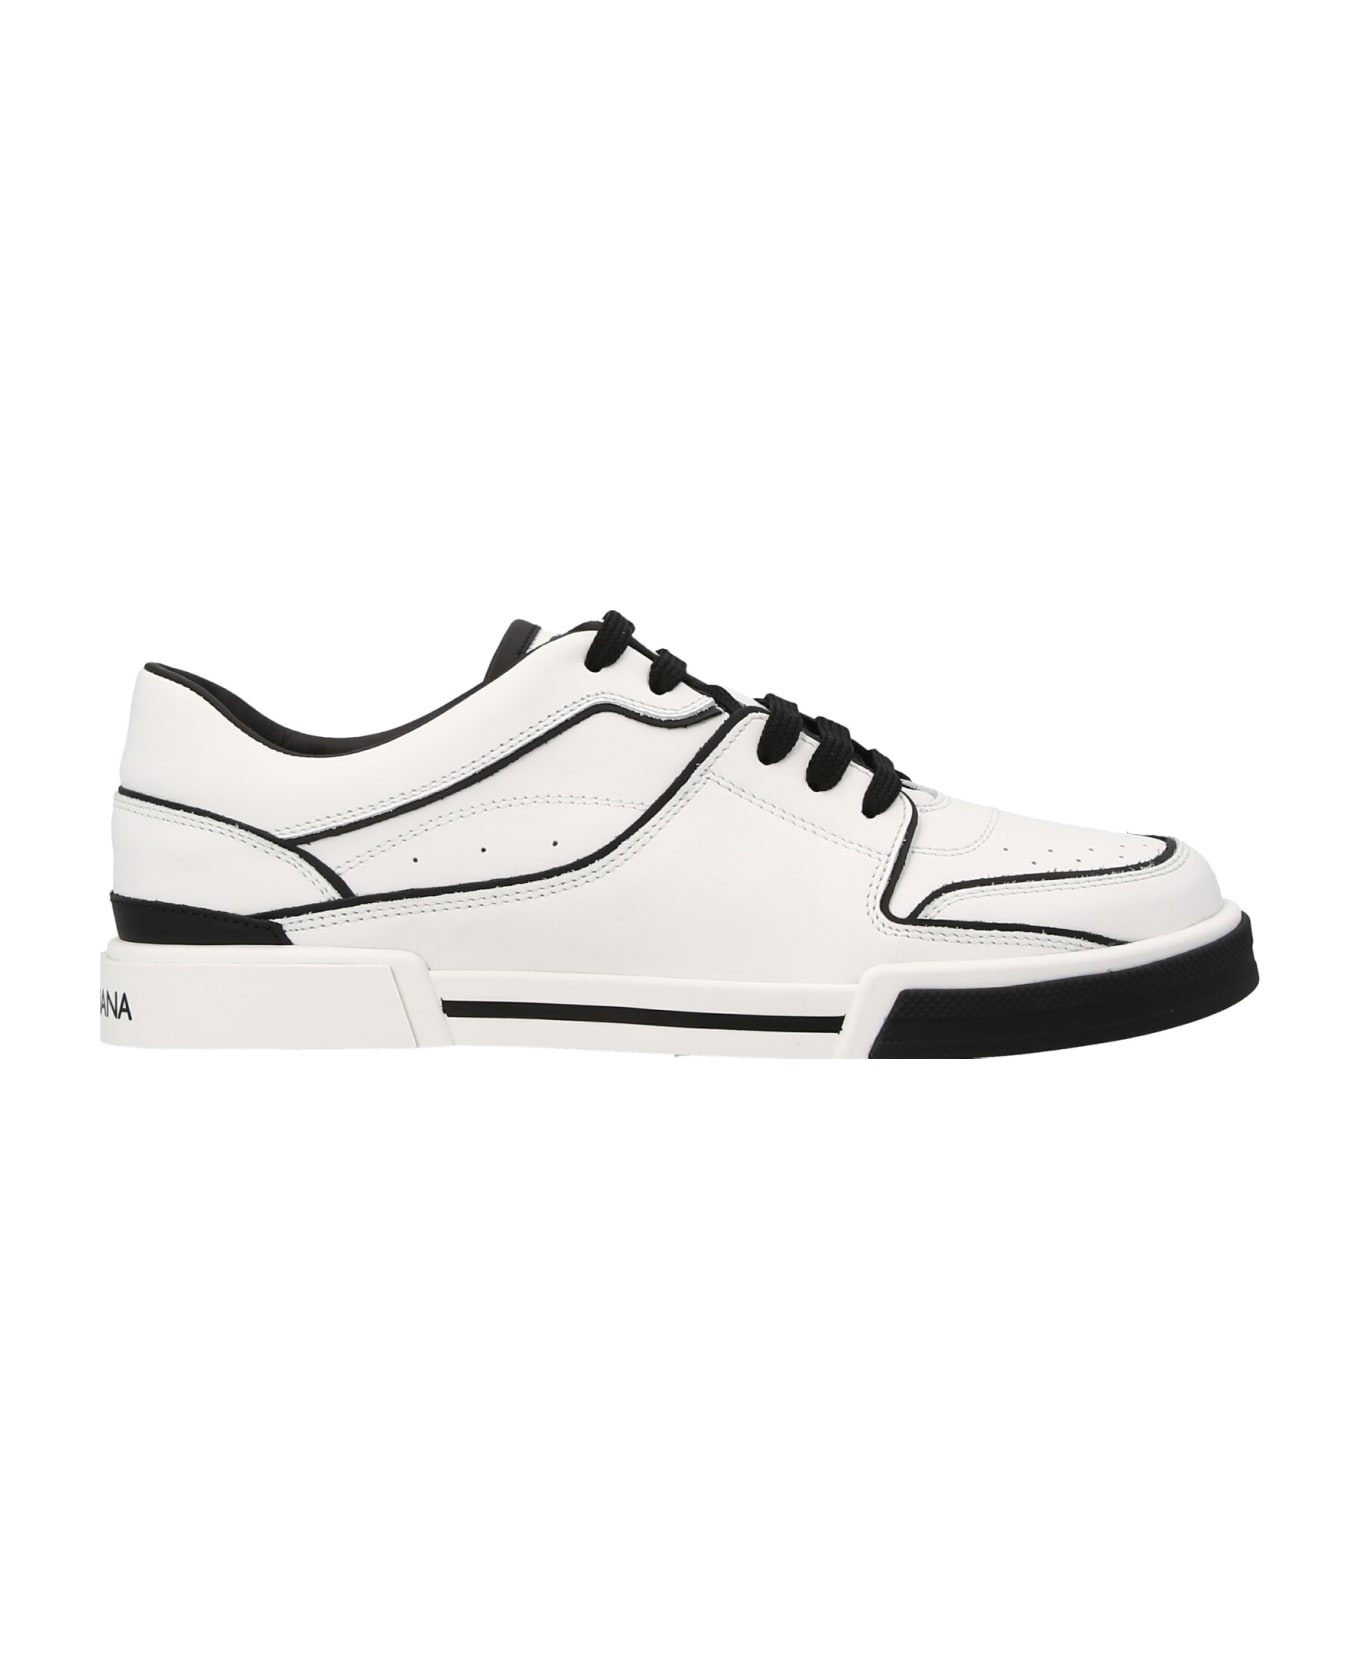 Dolce & Gabbana Logo Leather Sneakers - White/Black